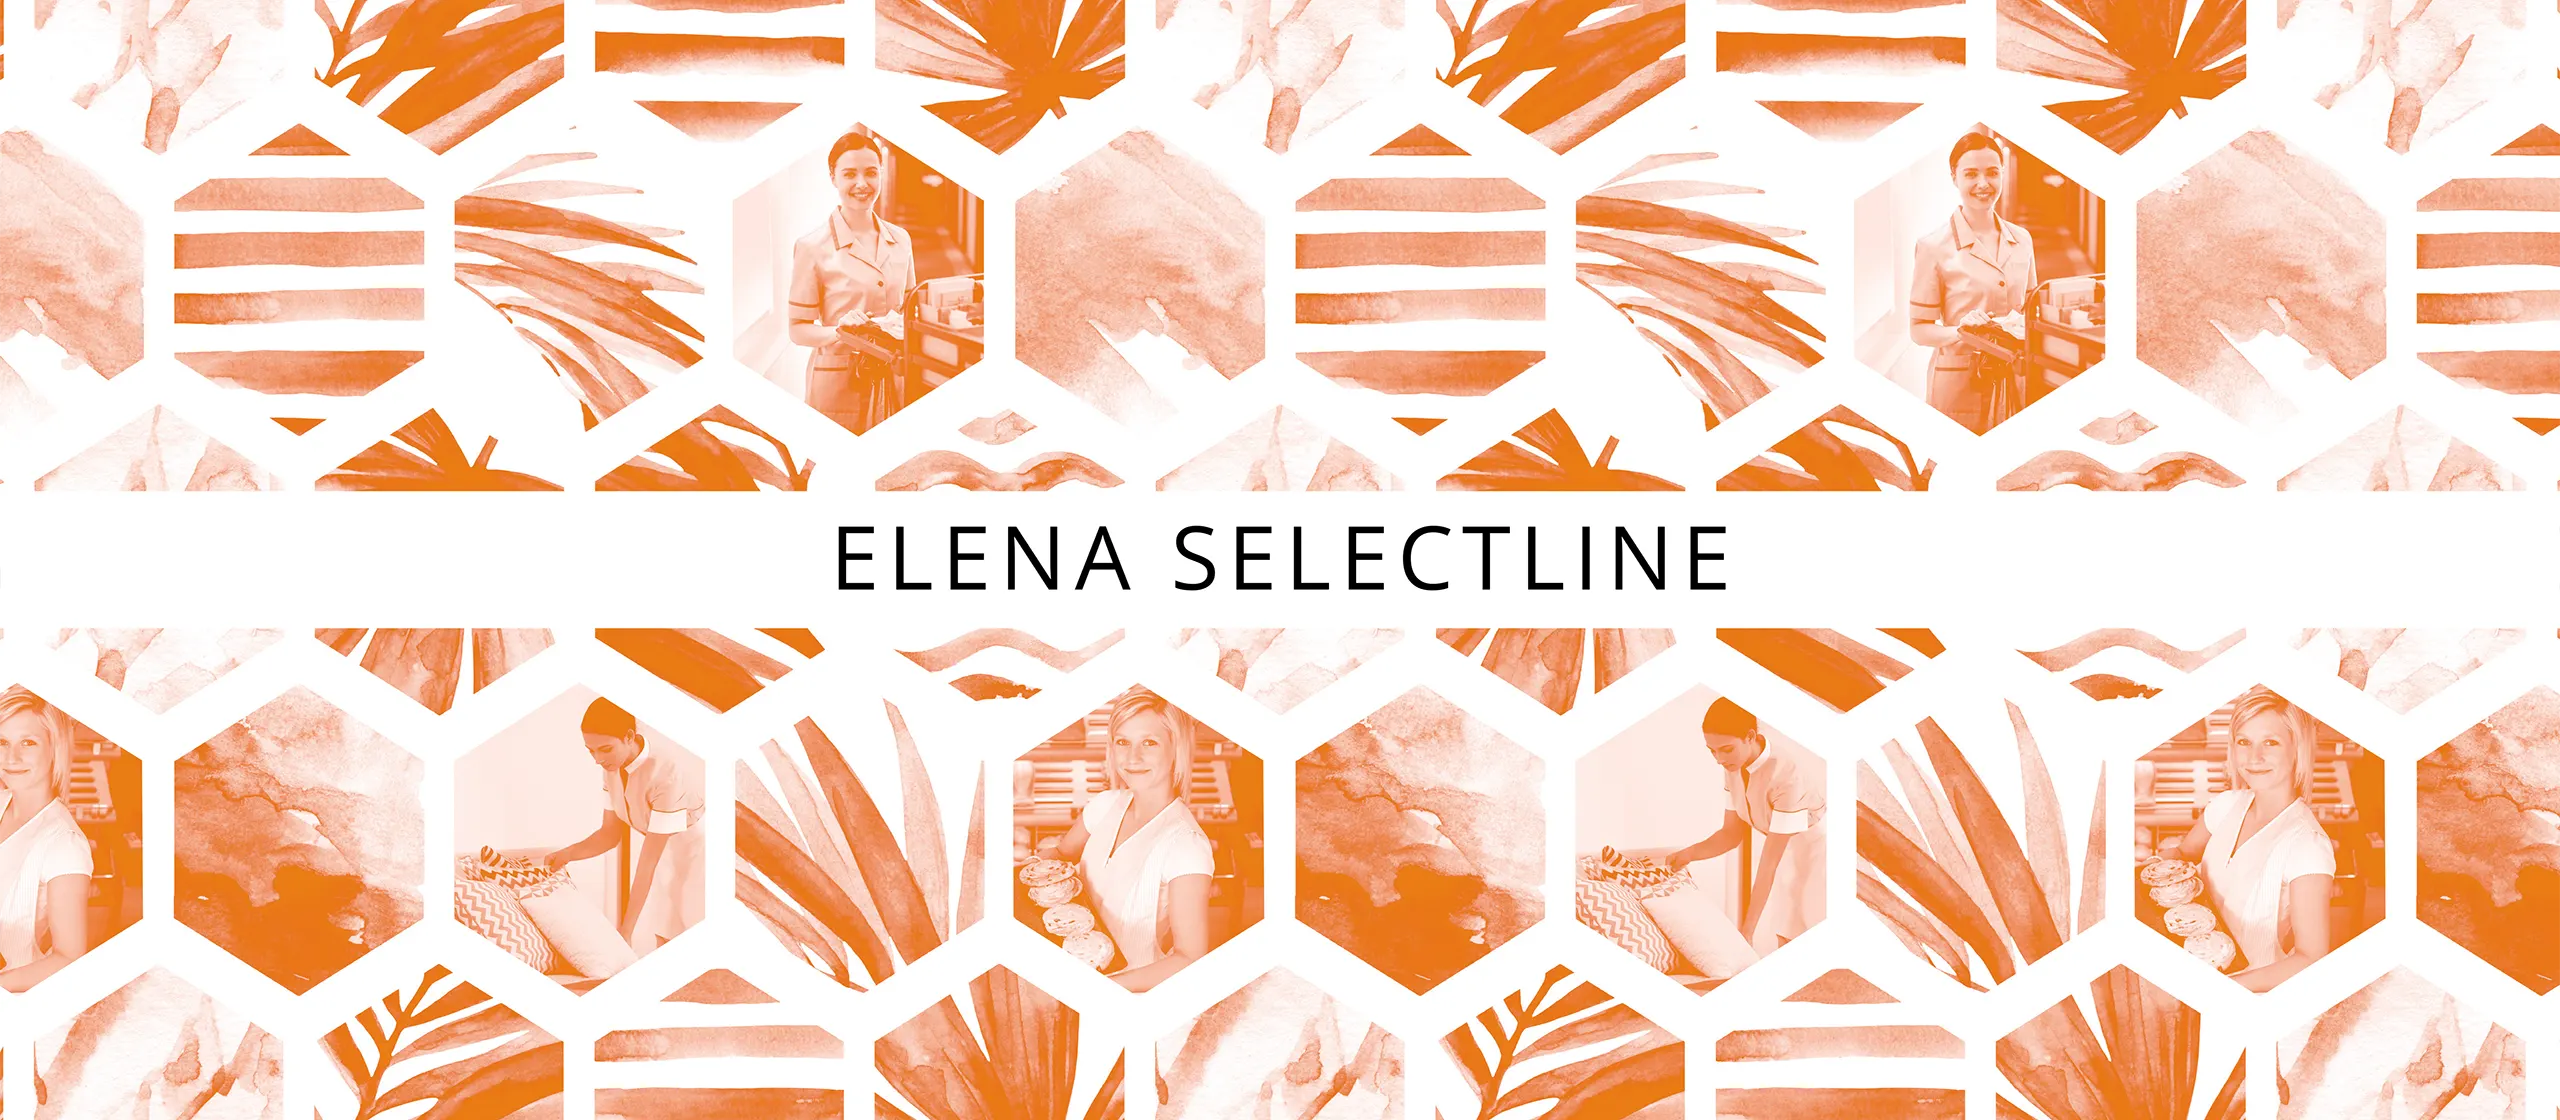 Elena Selectline